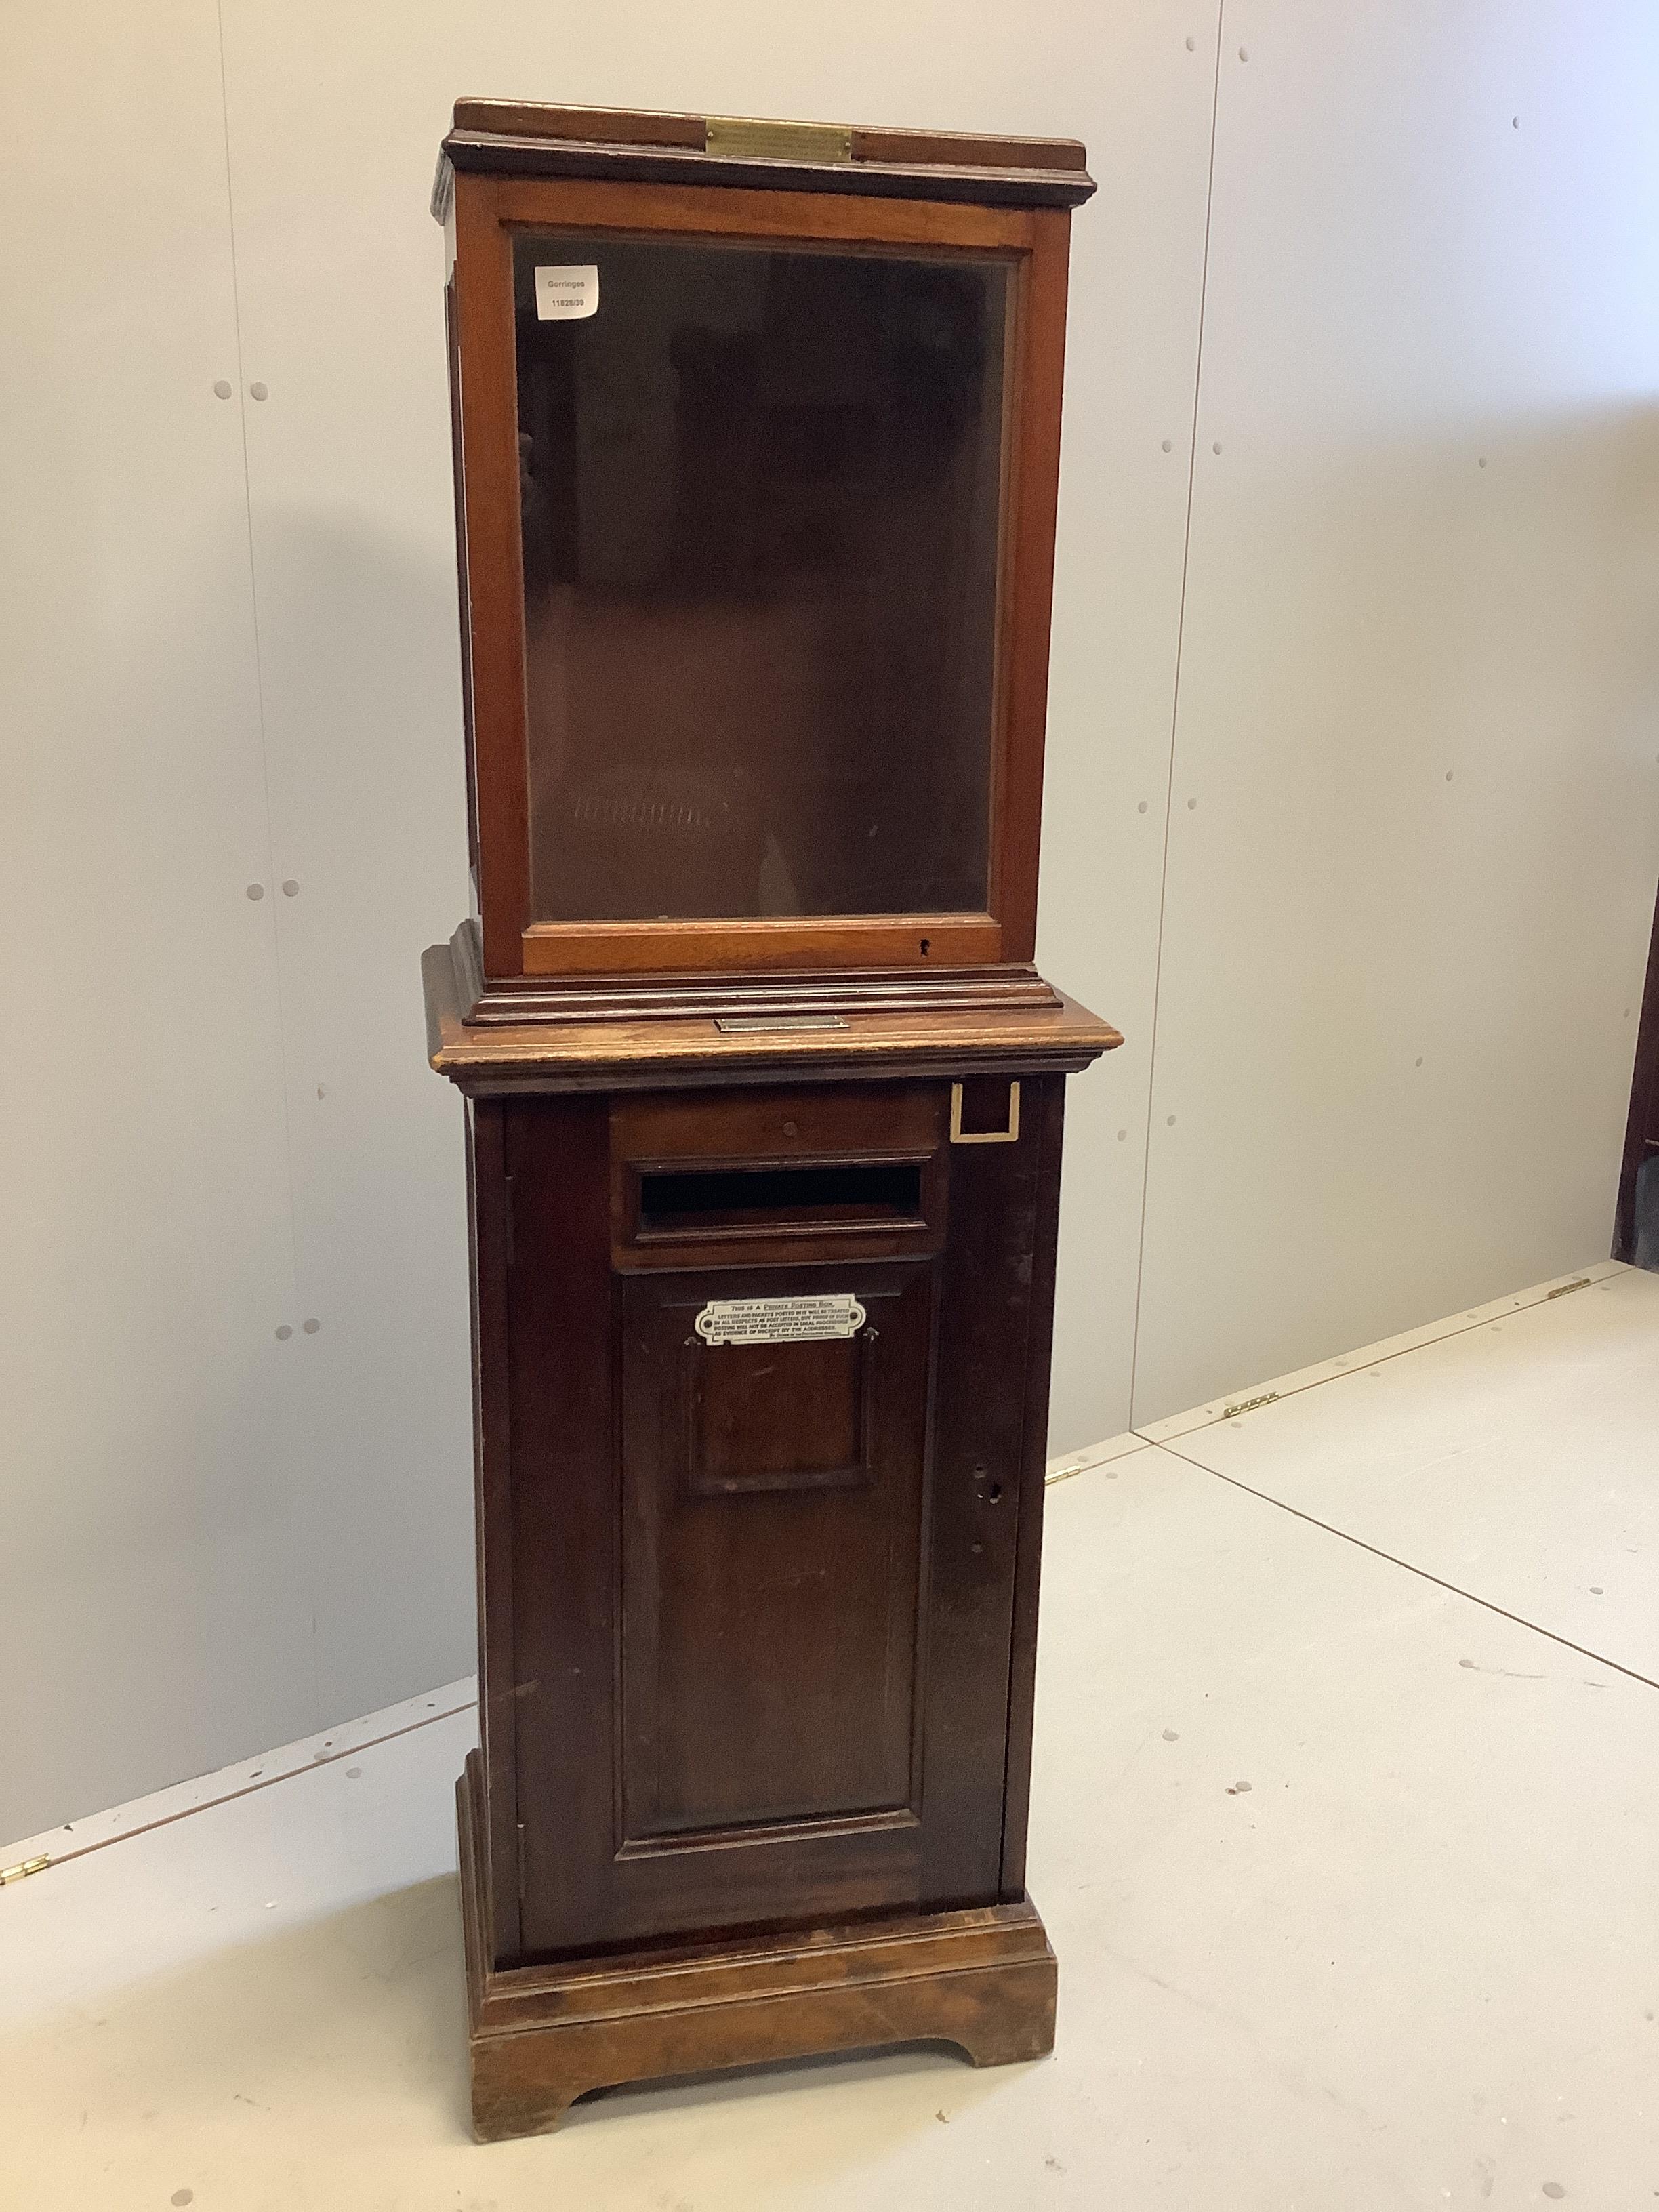 An early 20th century Hall Accessories Ltd., mahogany telephone/internal posting box, width 49cm, depth 35cm, height 148cm